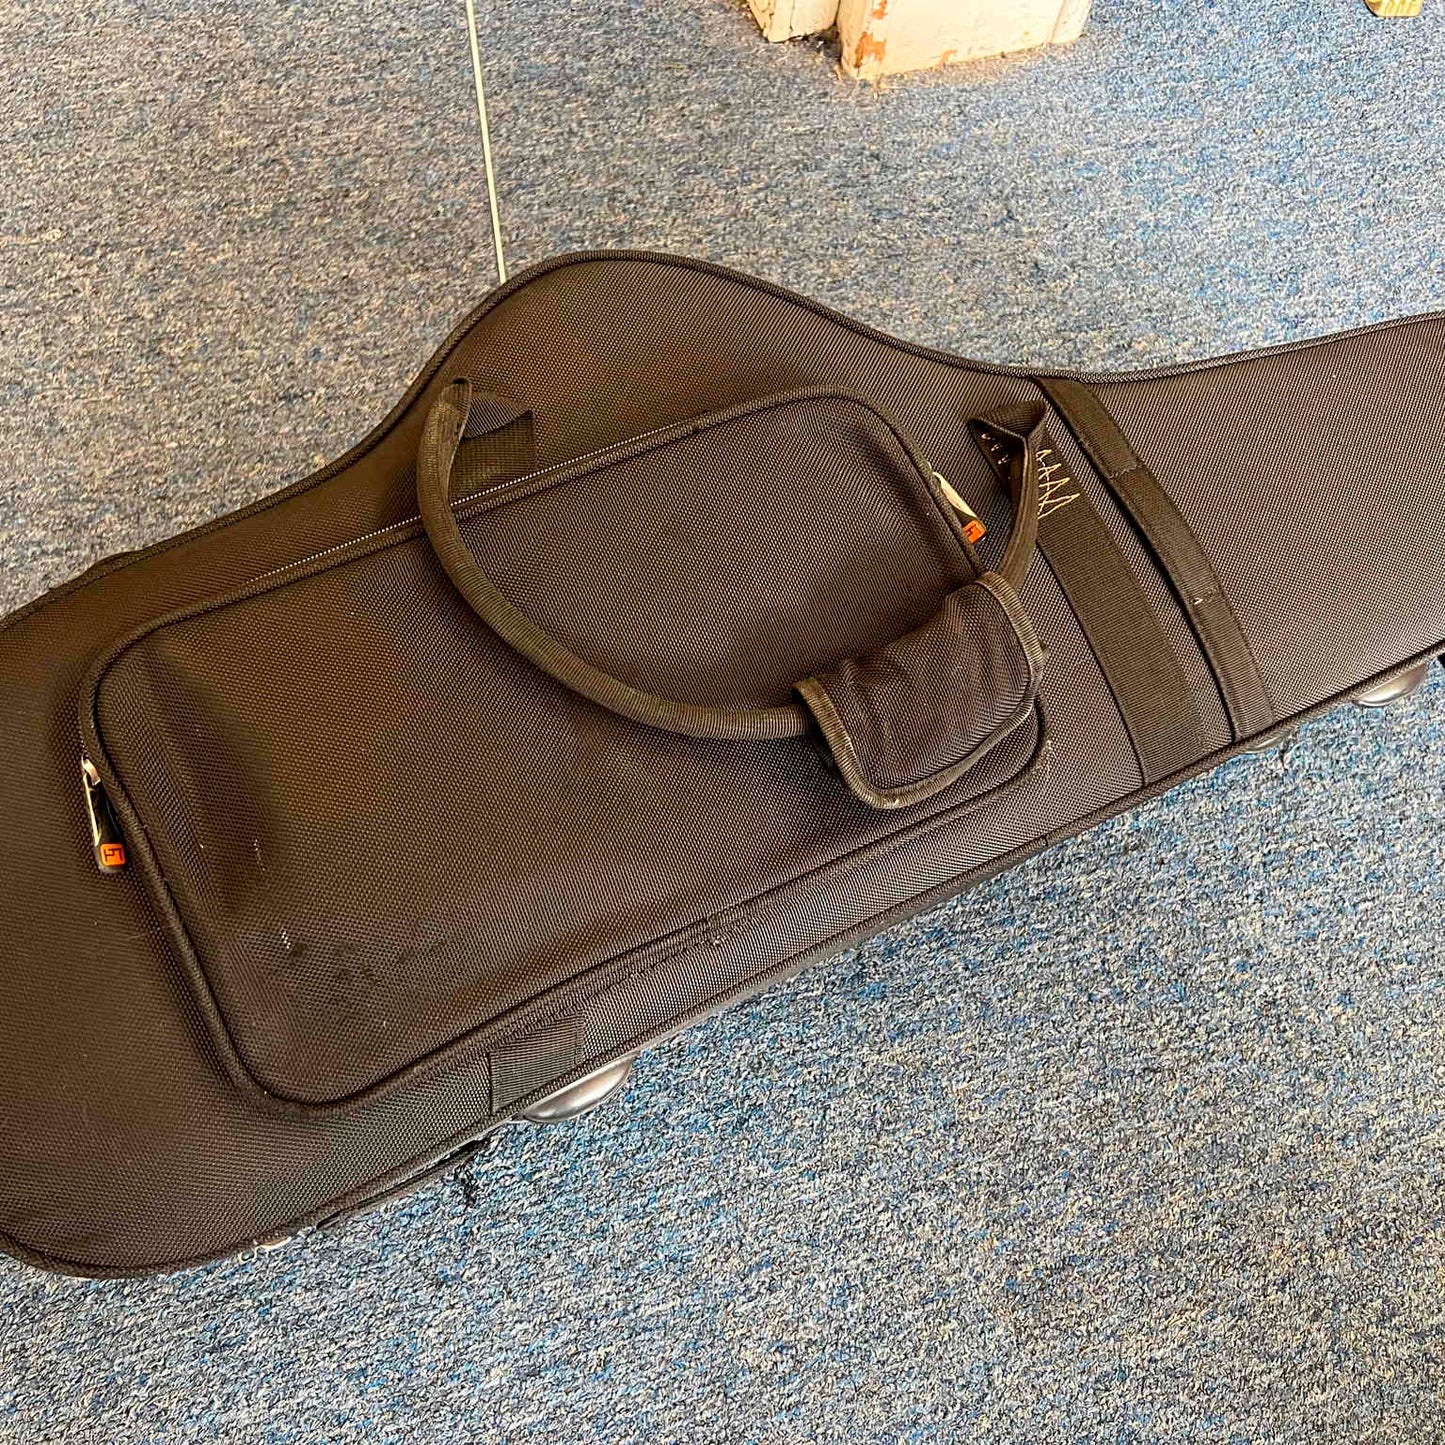 Protec PRO PAC Contoured XL Tenor Saxophone Case - Black (used)